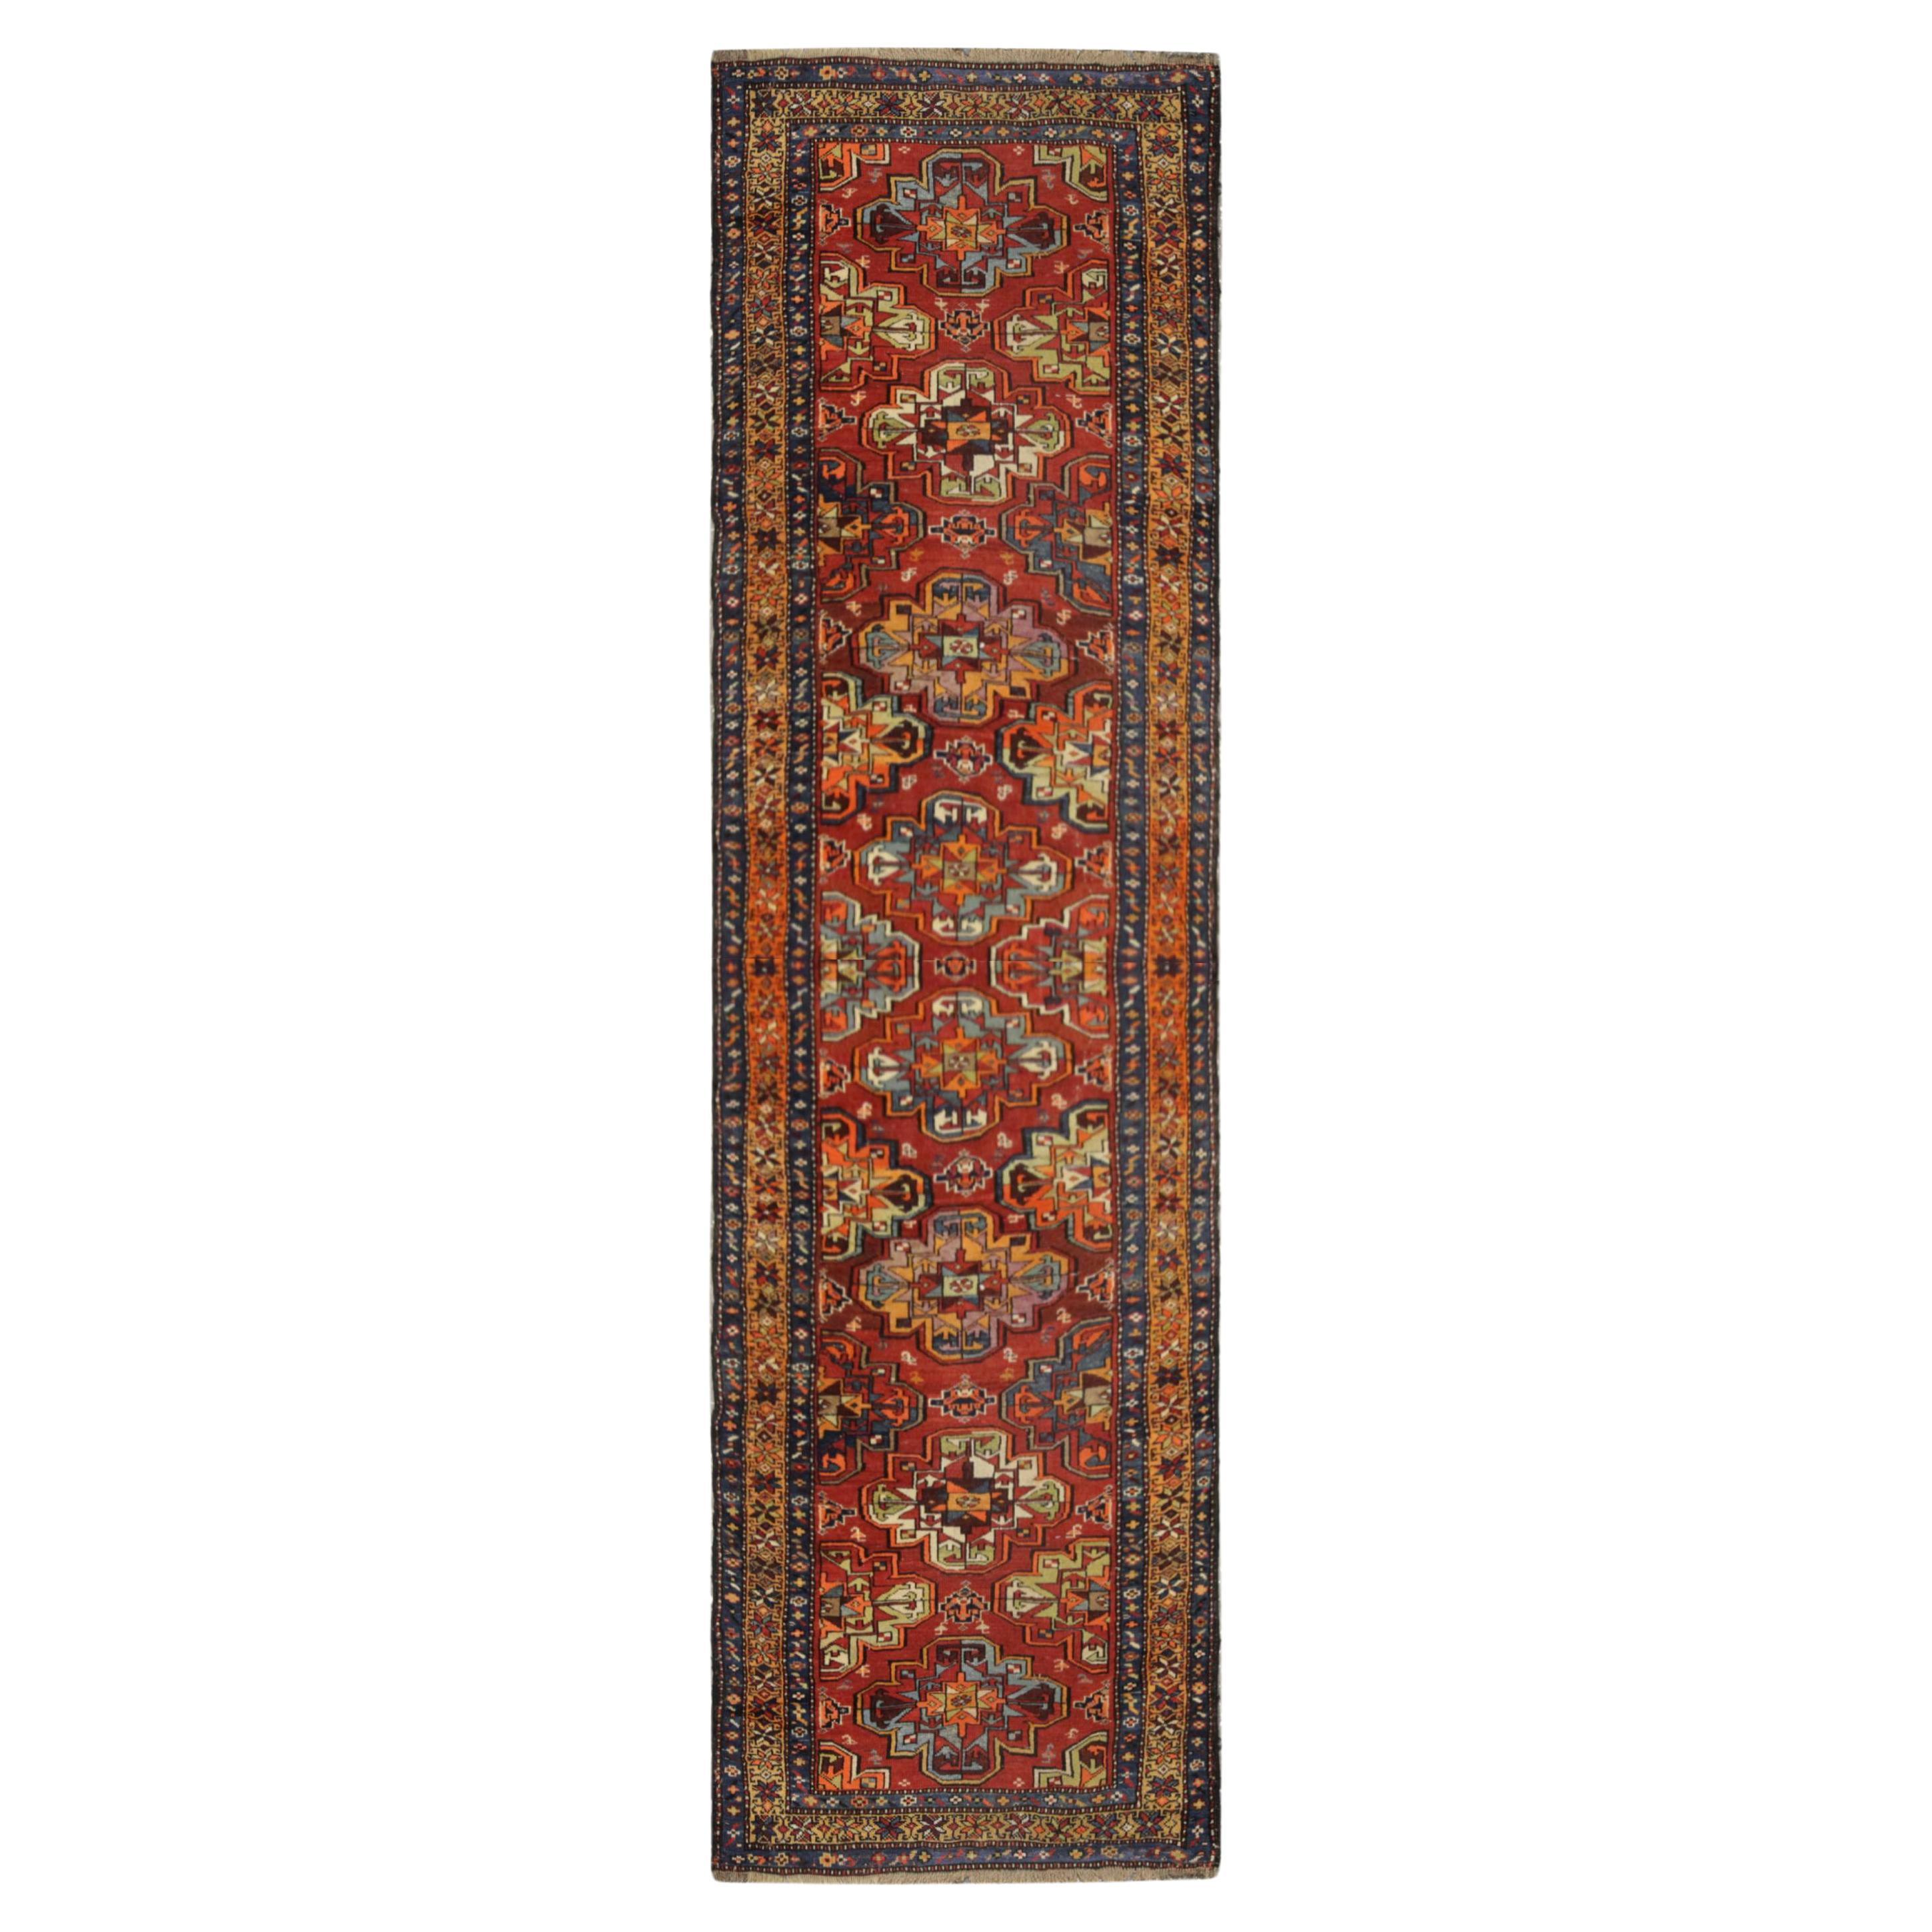 Tapis ancien turkmène, tapis de couloir oriental, tapis de salon en vente